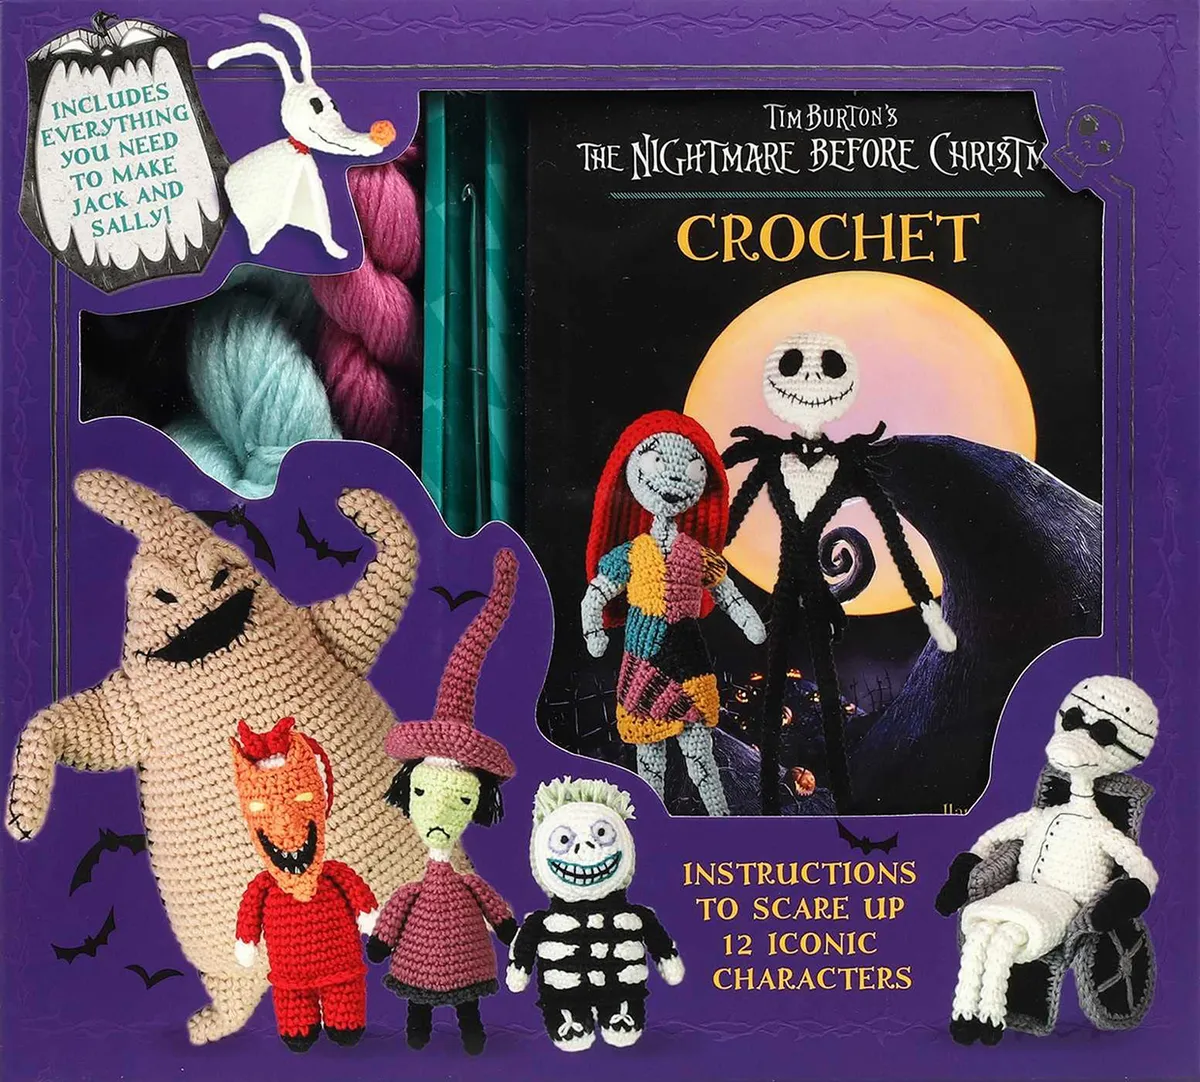 Nightmare Before Christmas crochet kit